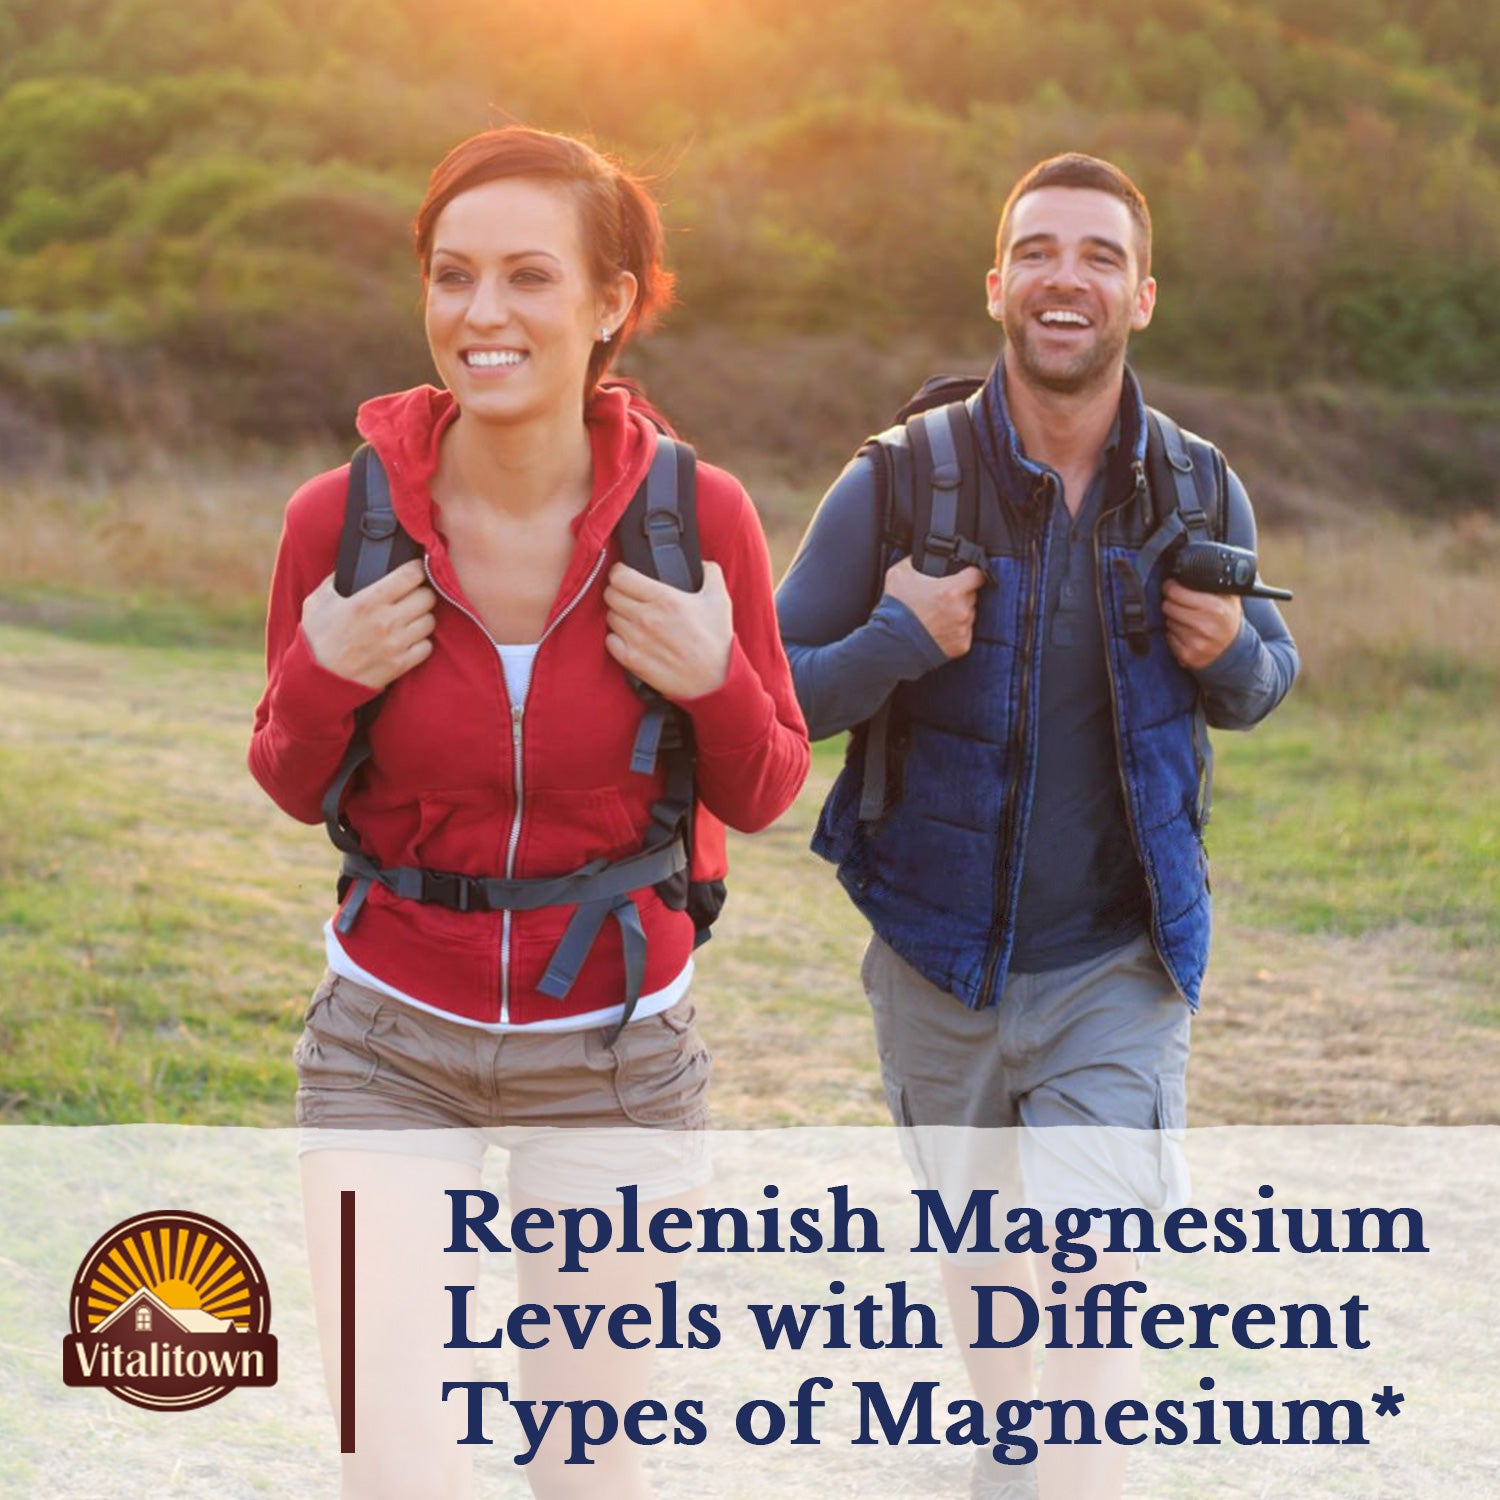 Extra Strength Magnesium Complex